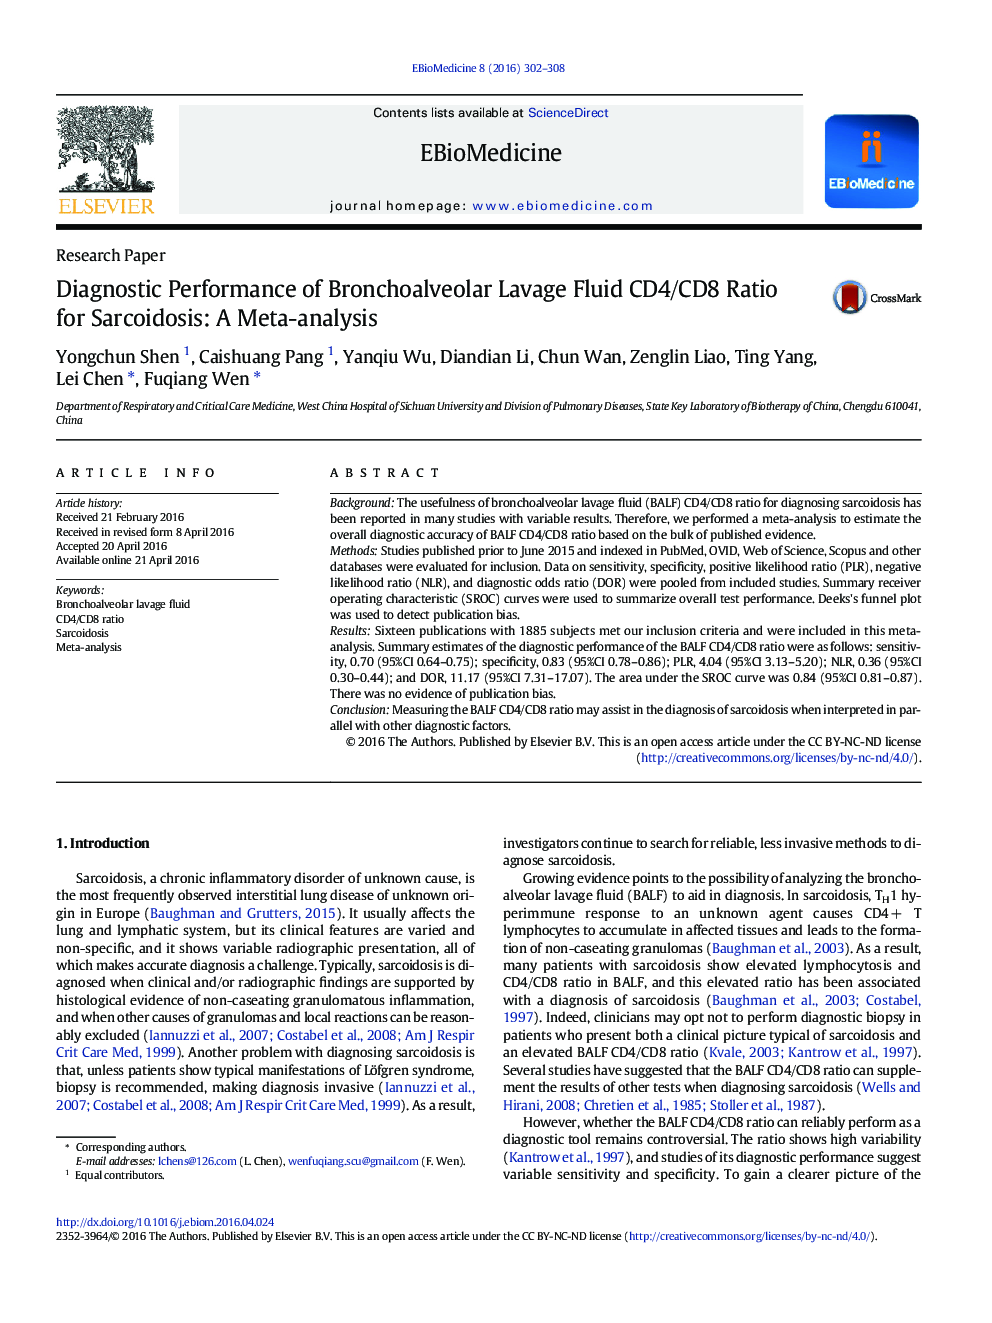 Diagnostic Performance of Bronchoalveolar Lavage Fluid CD4/CD8 Ratio for Sarcoidosis: A Meta-analysis